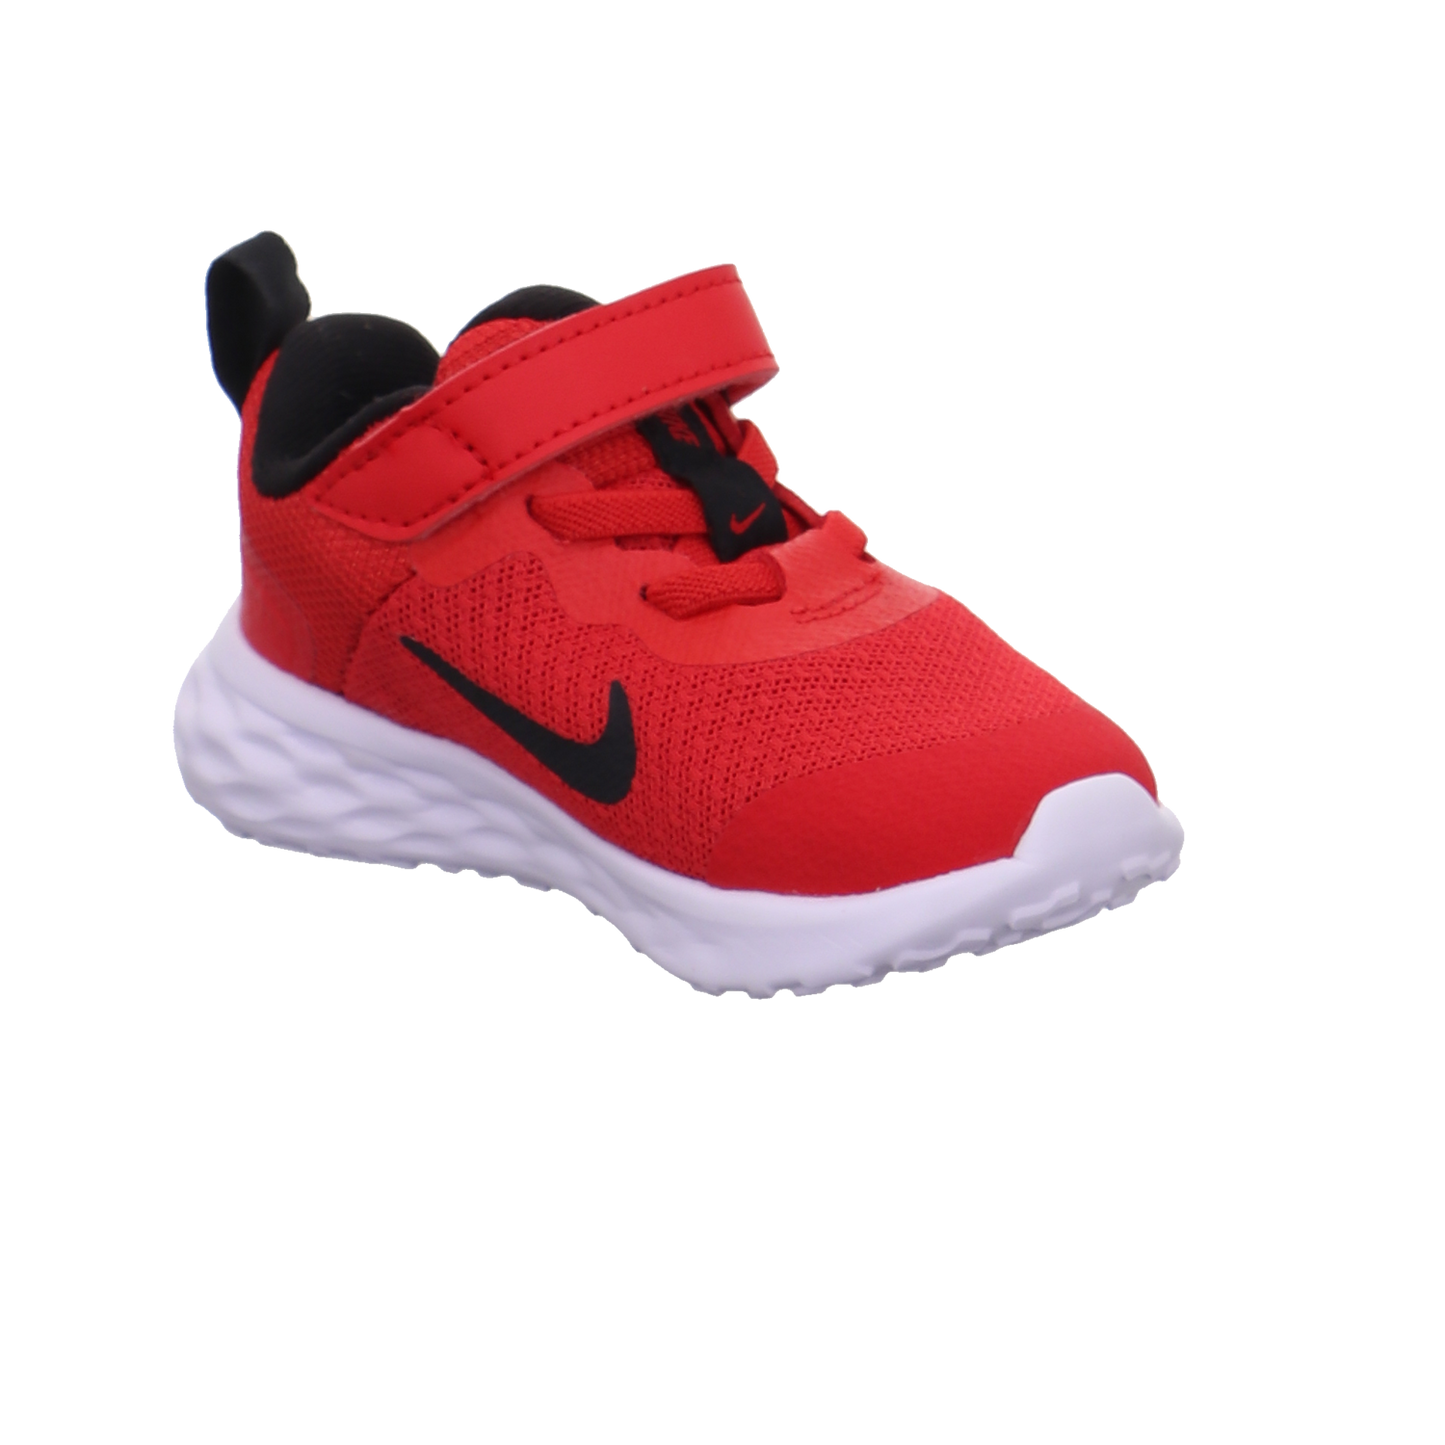 Nike Krabbel- und Lauflernschuhe rot kombi Bild7